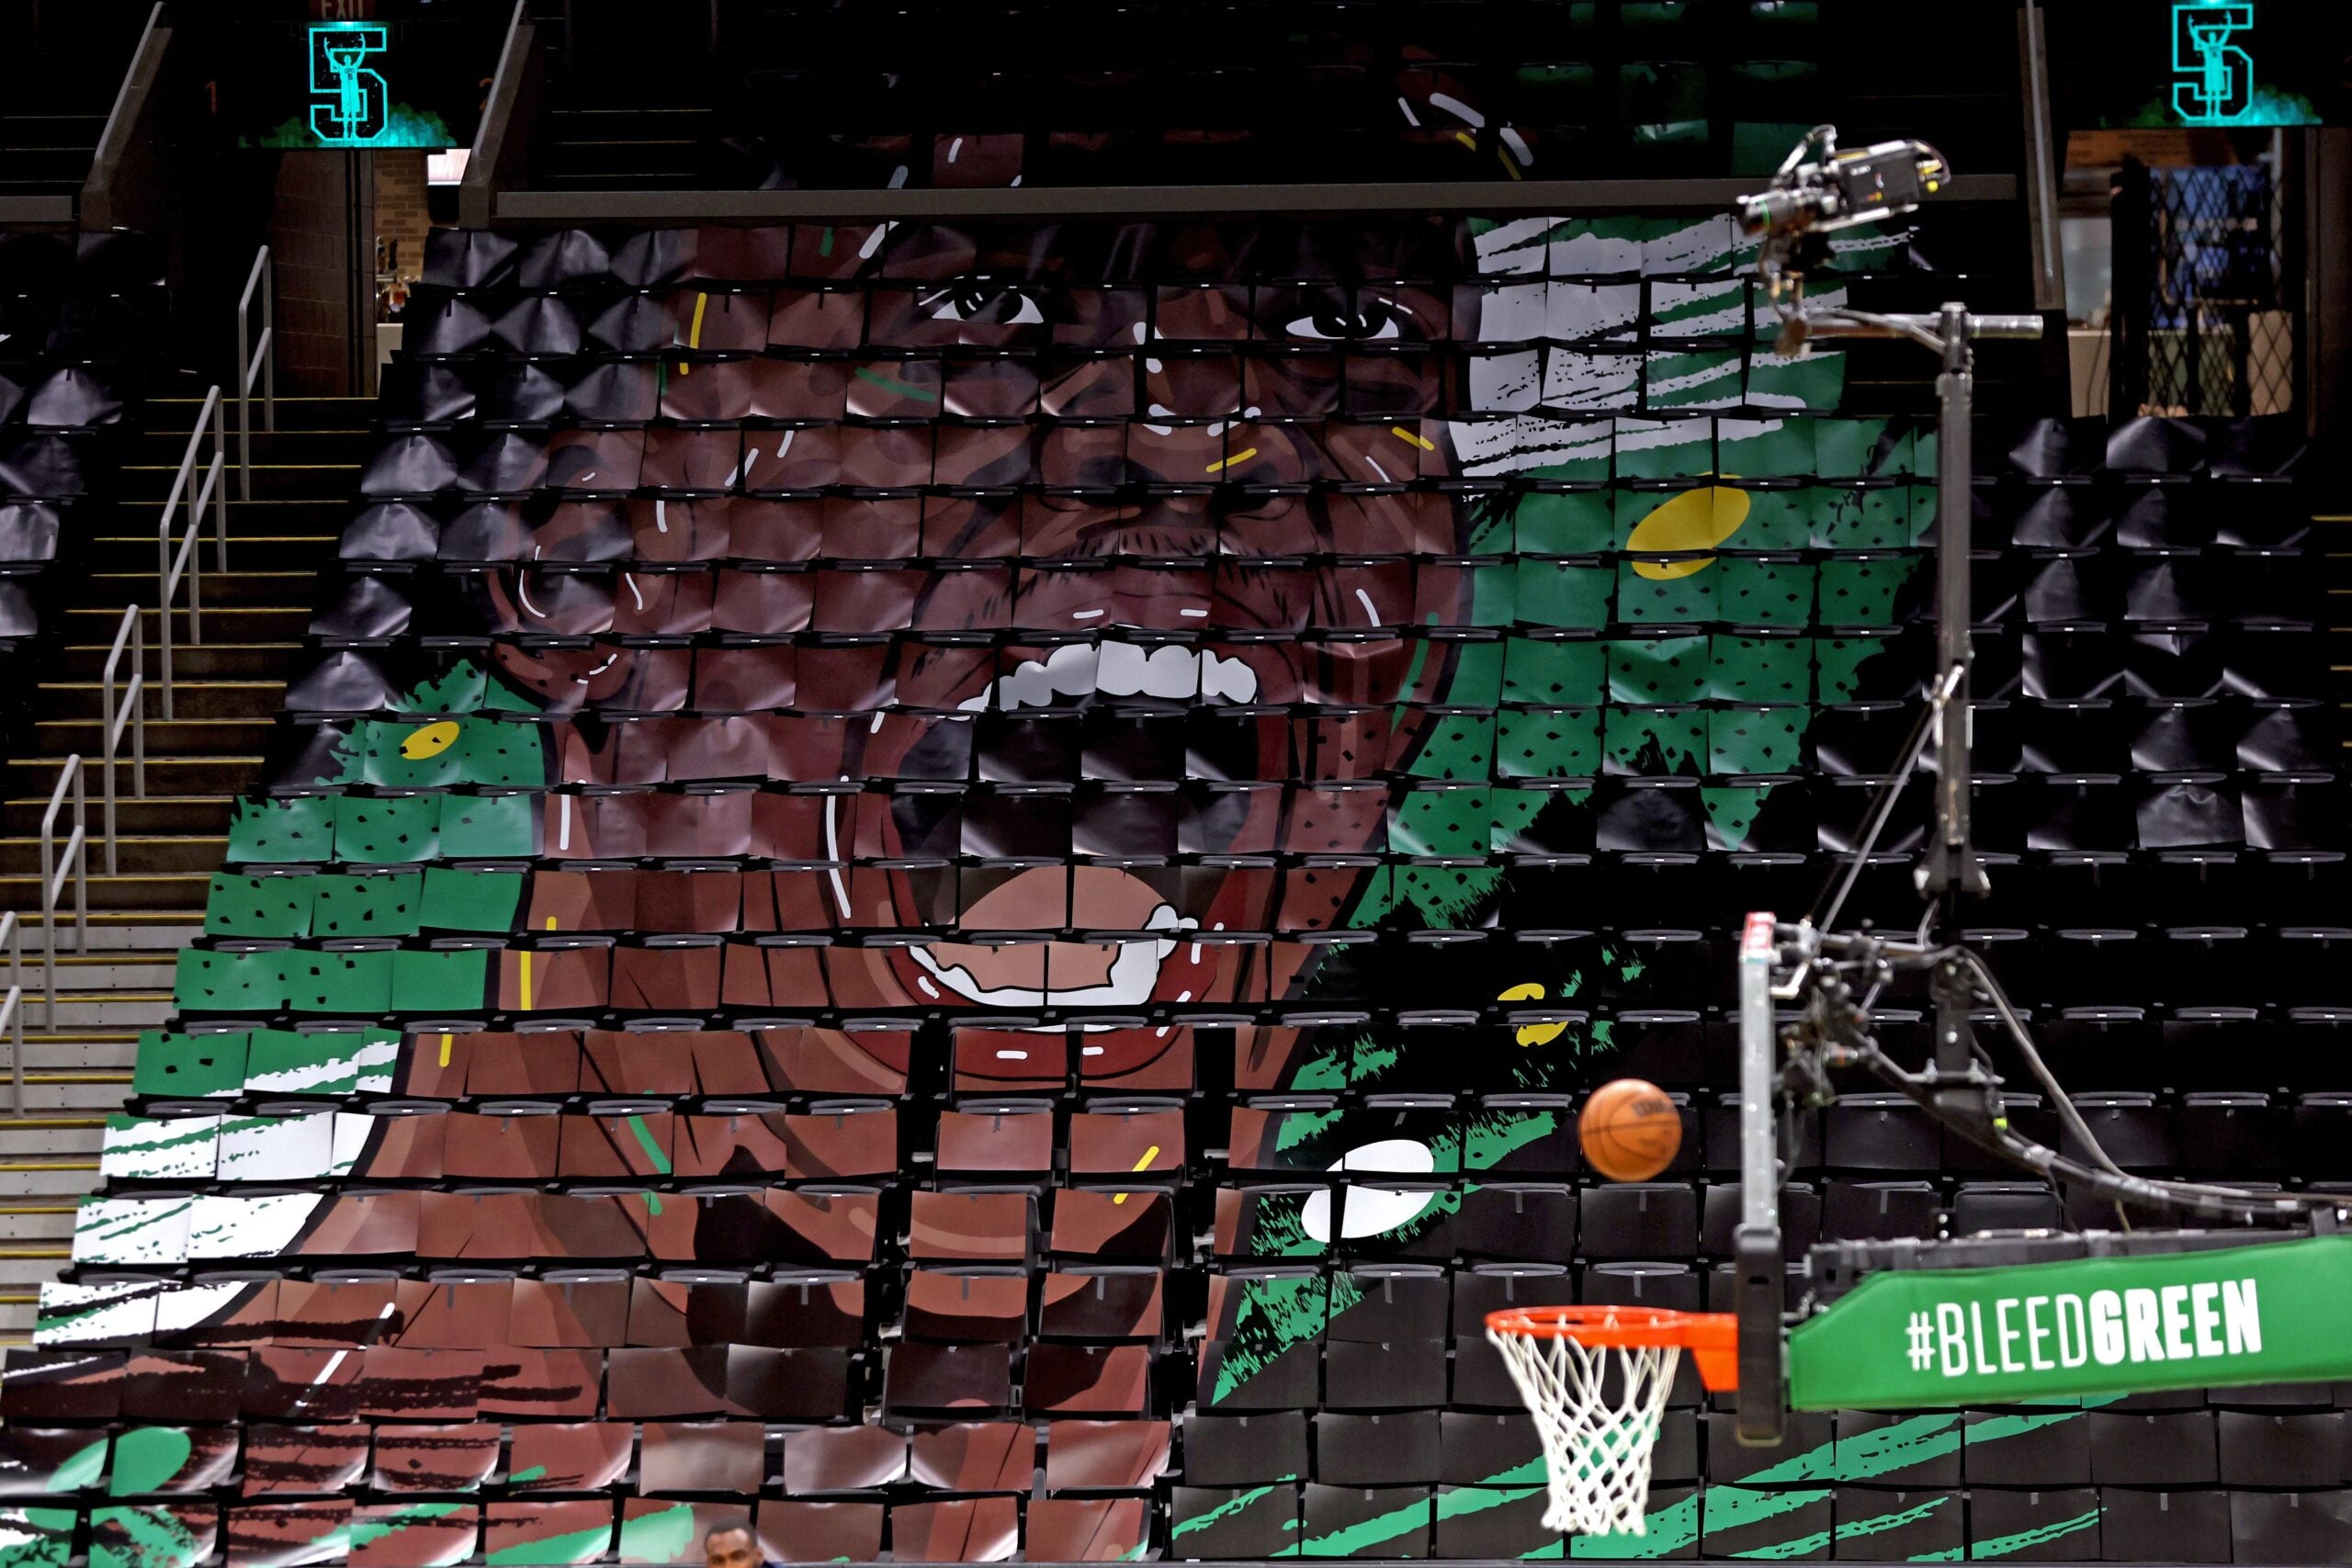 Boston Celtics retire Kevin Garnett's jersey in ceremony